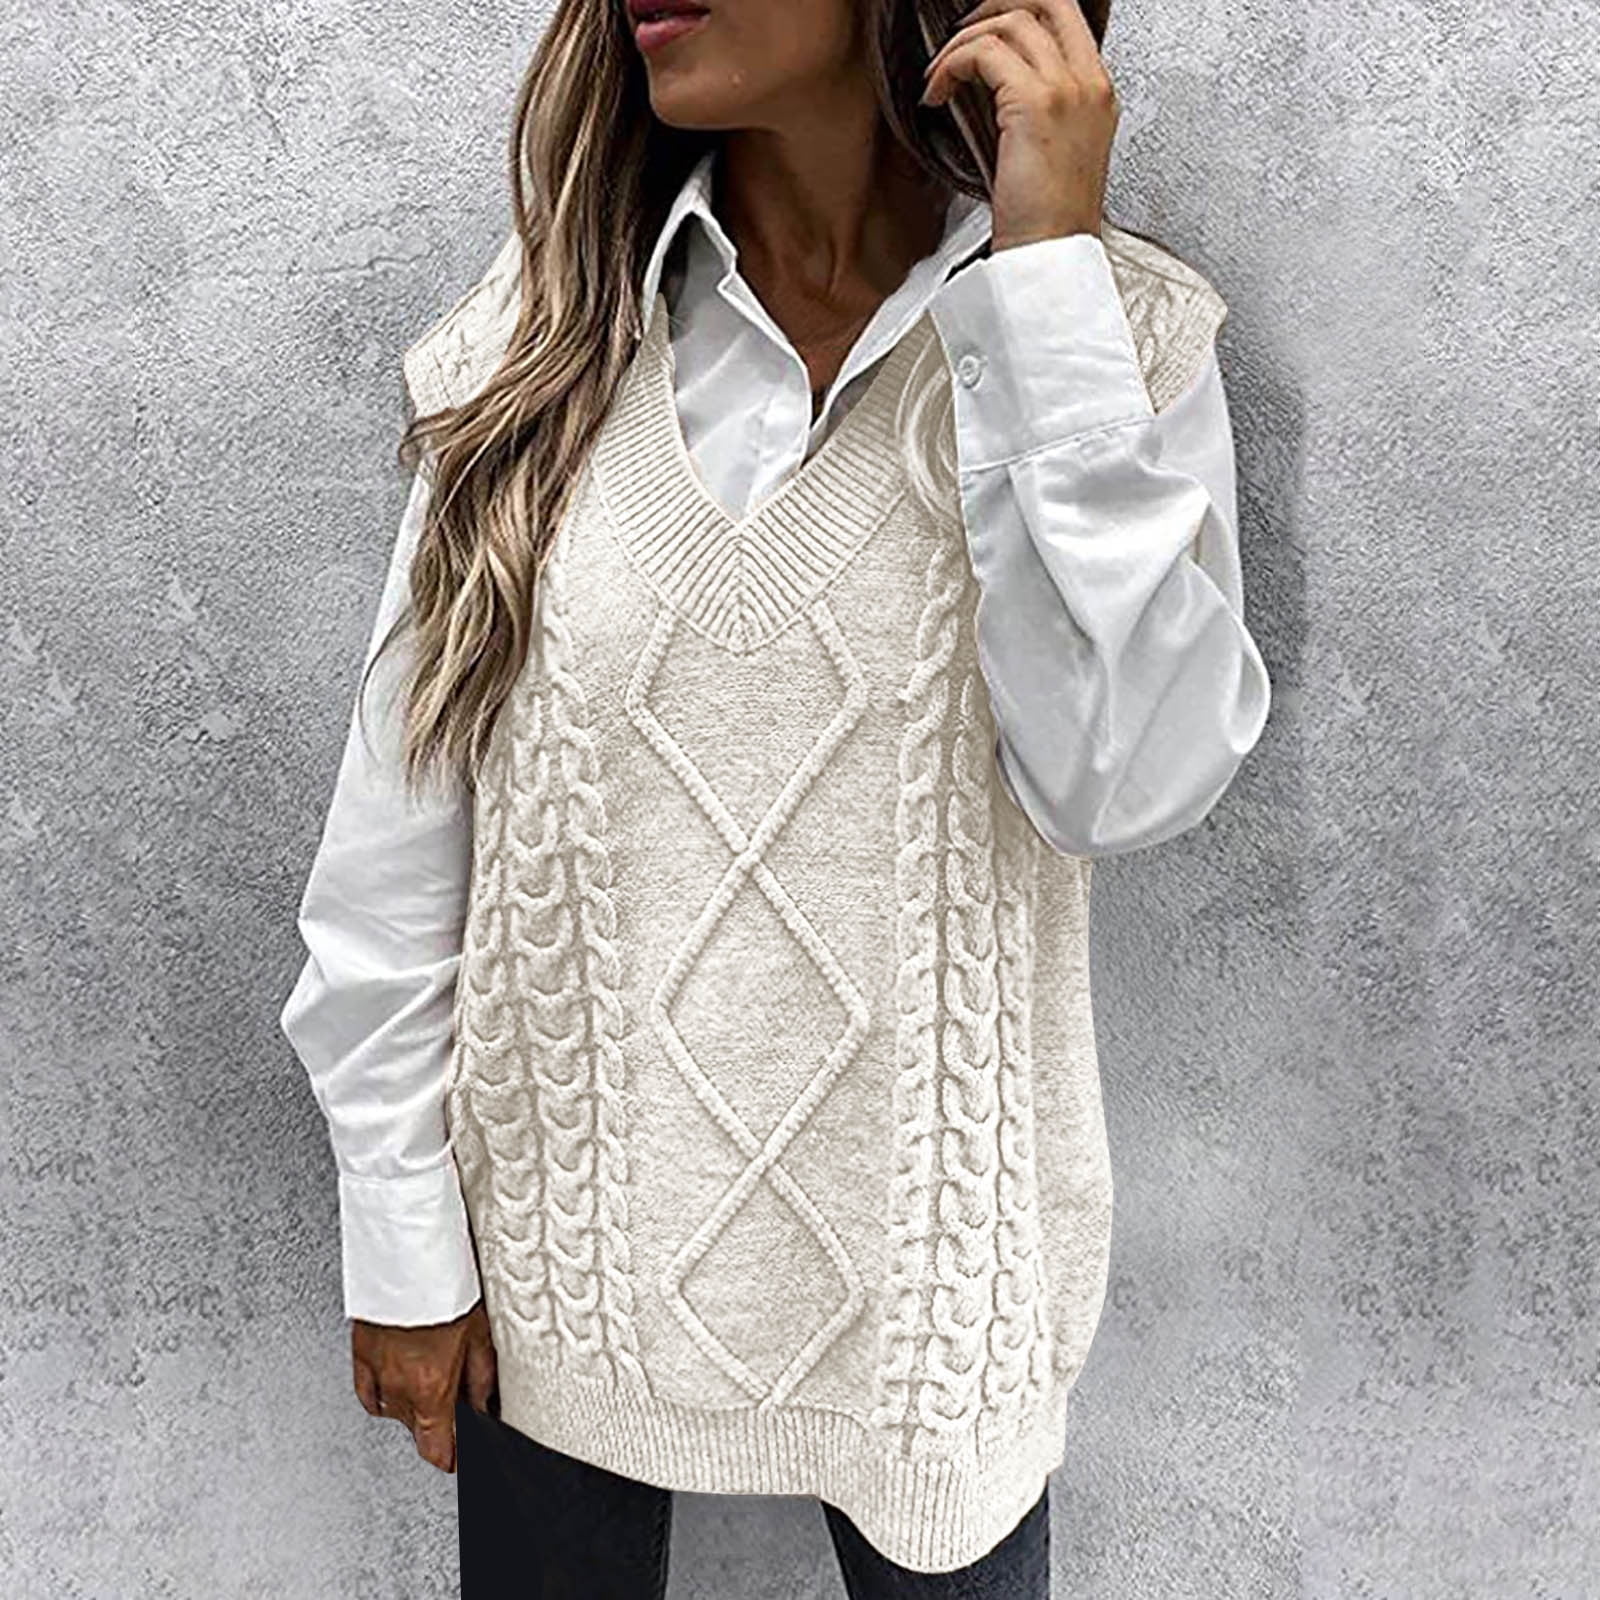 POROPL Knit Sleeveless V-Neck Solid Women'S Sweater Vests White Size S ...